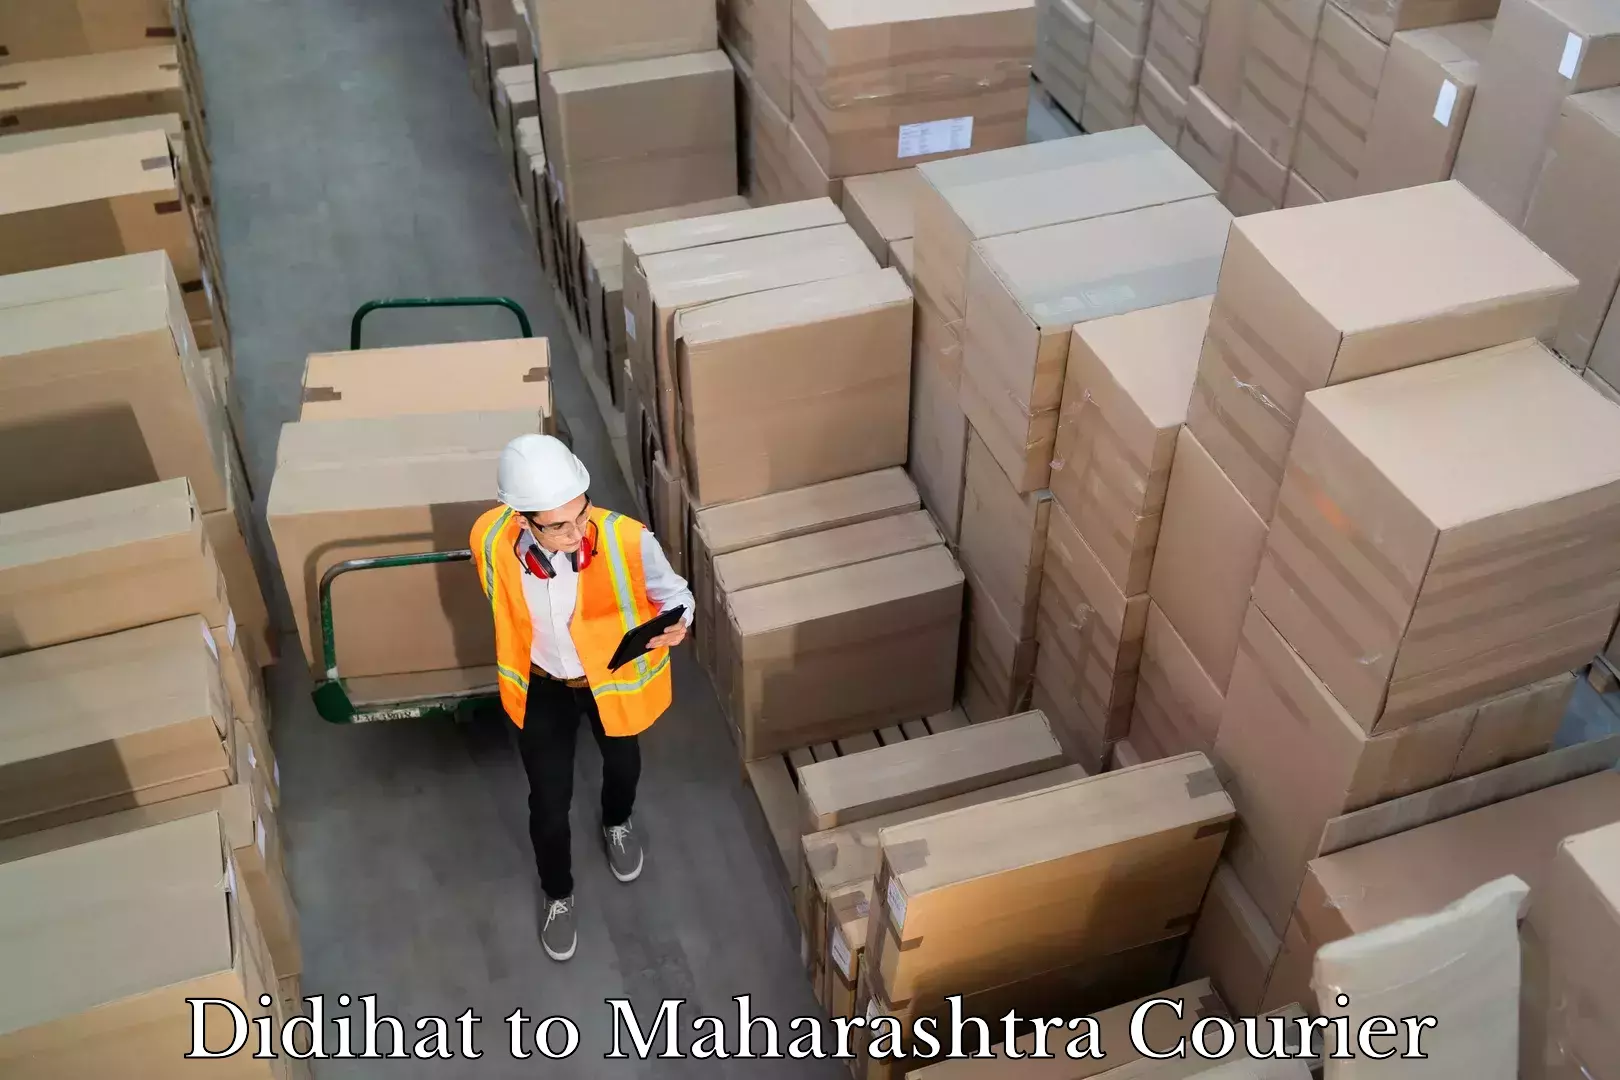 Subscription-based courier Didihat to Maharashtra